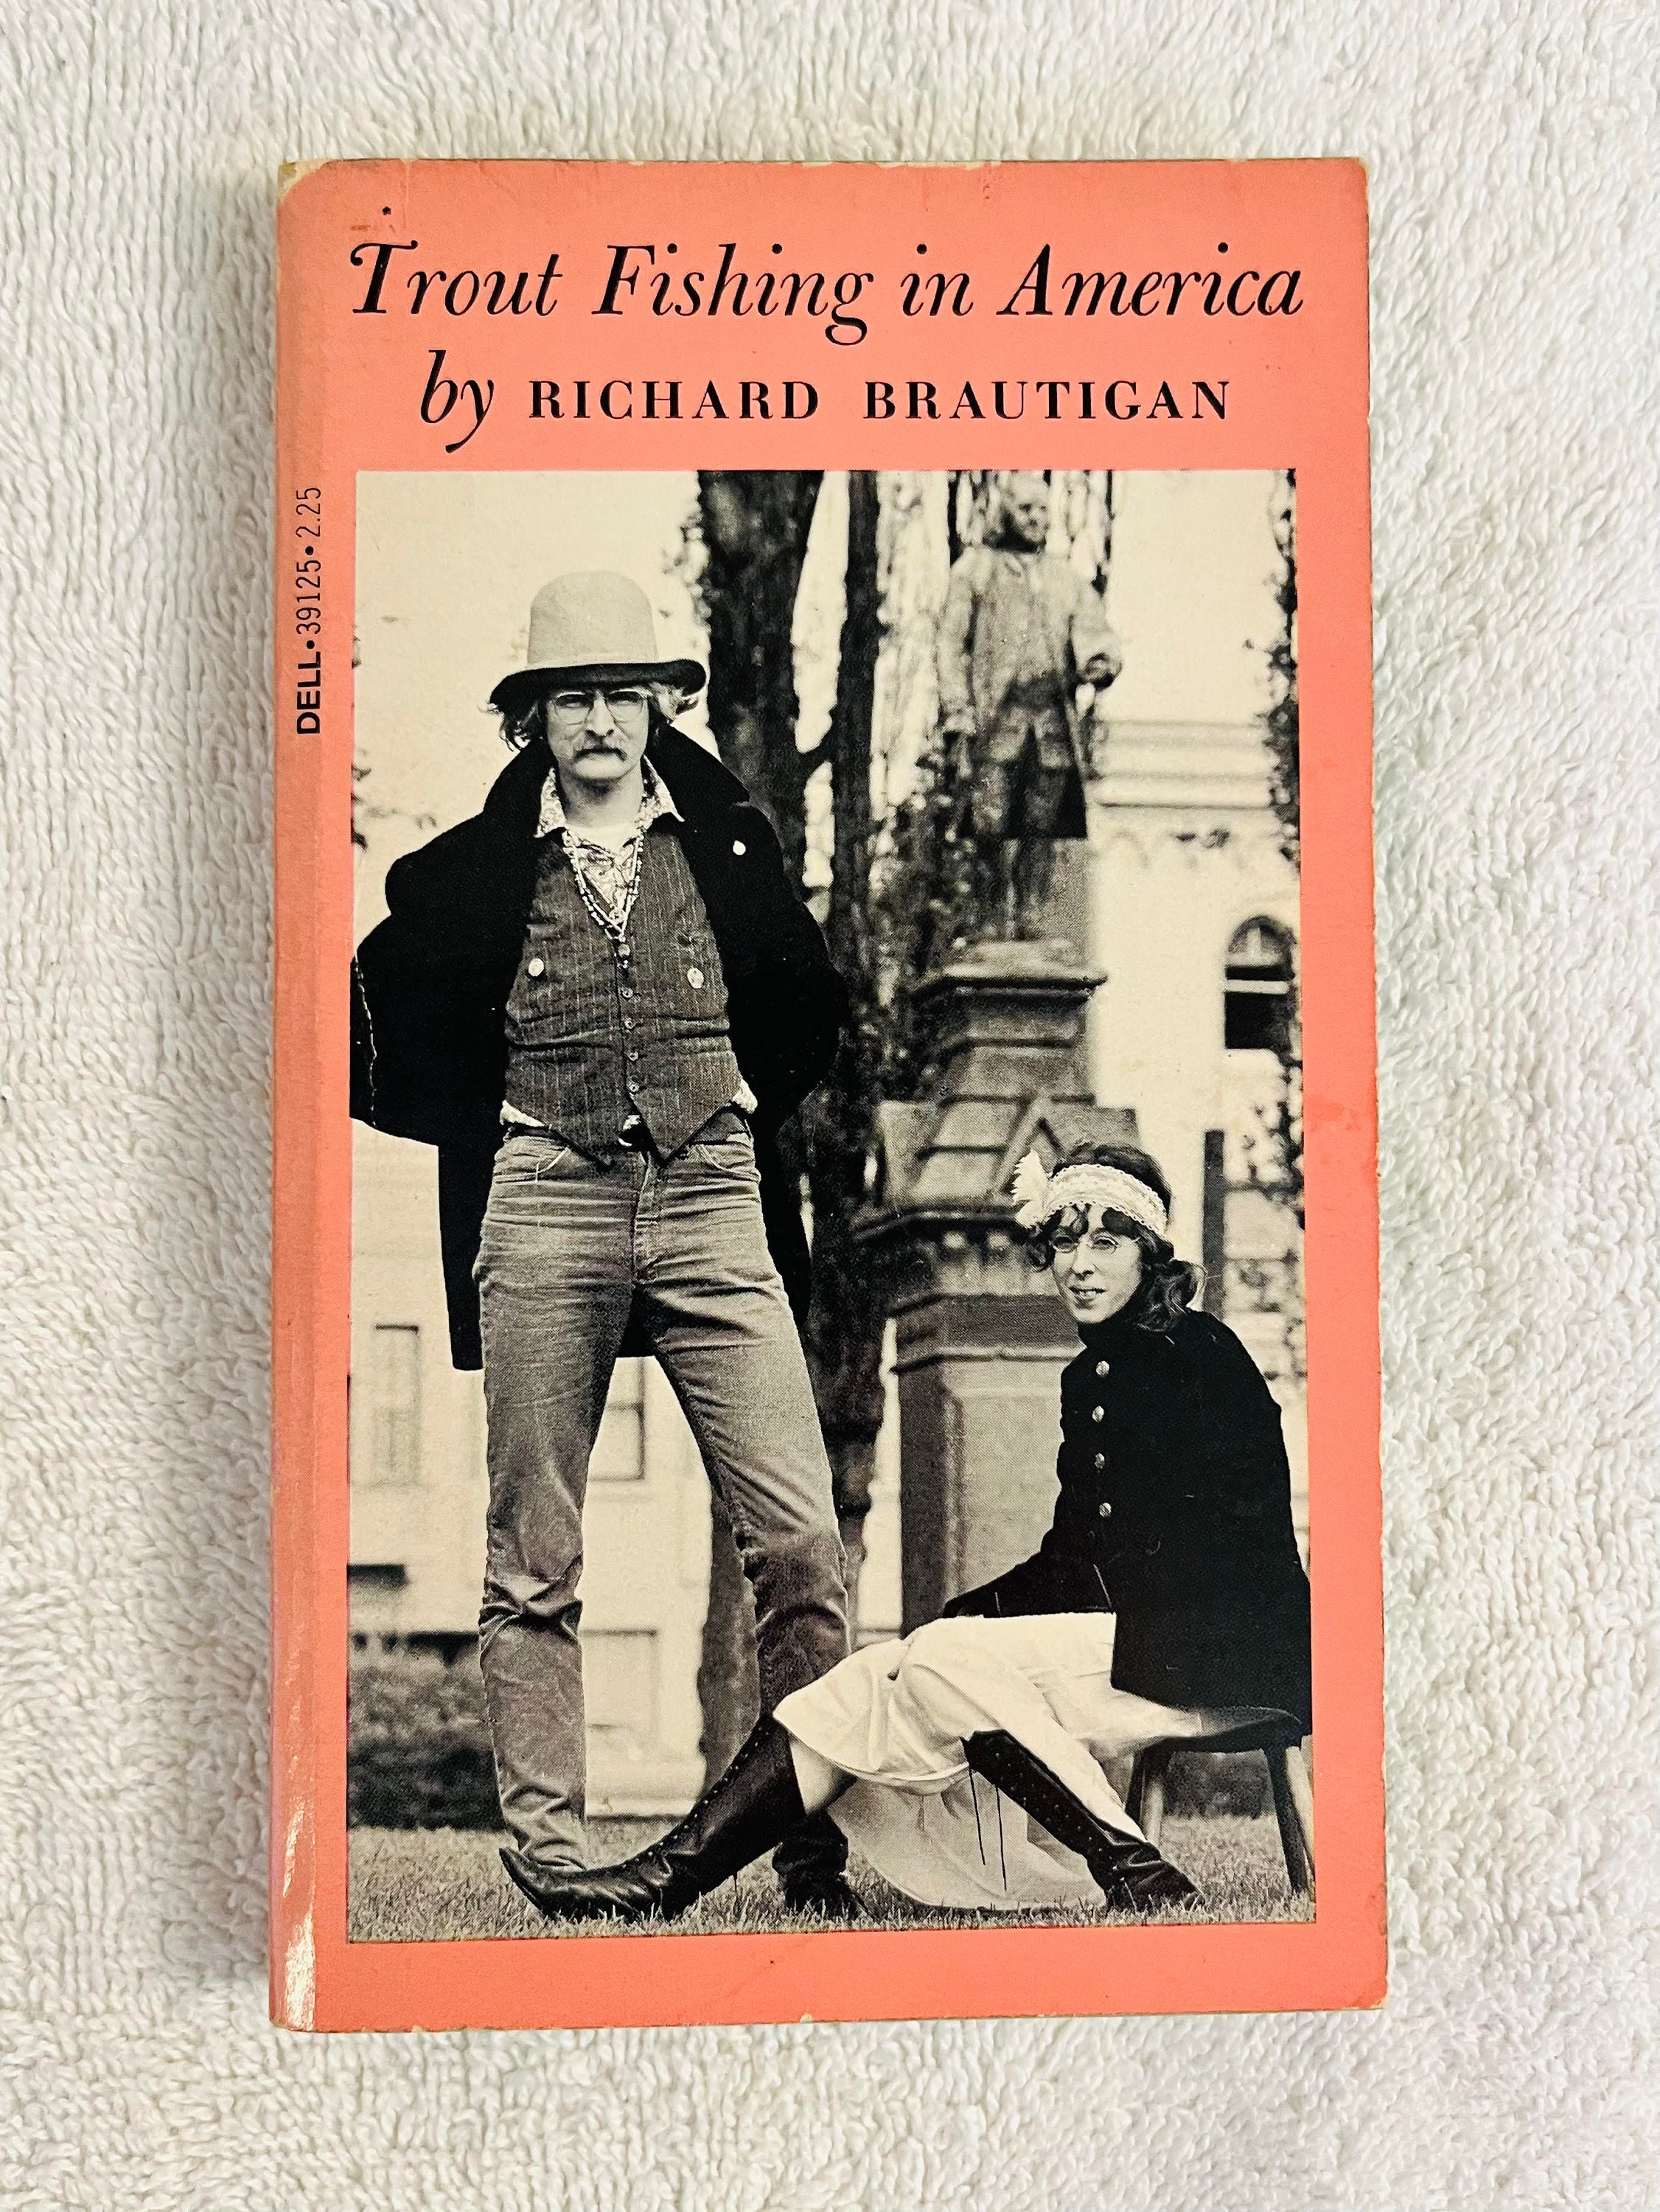 RICHARD BRAUTIGAN - Trout Fishing In America - 1981 Laurel Paperback